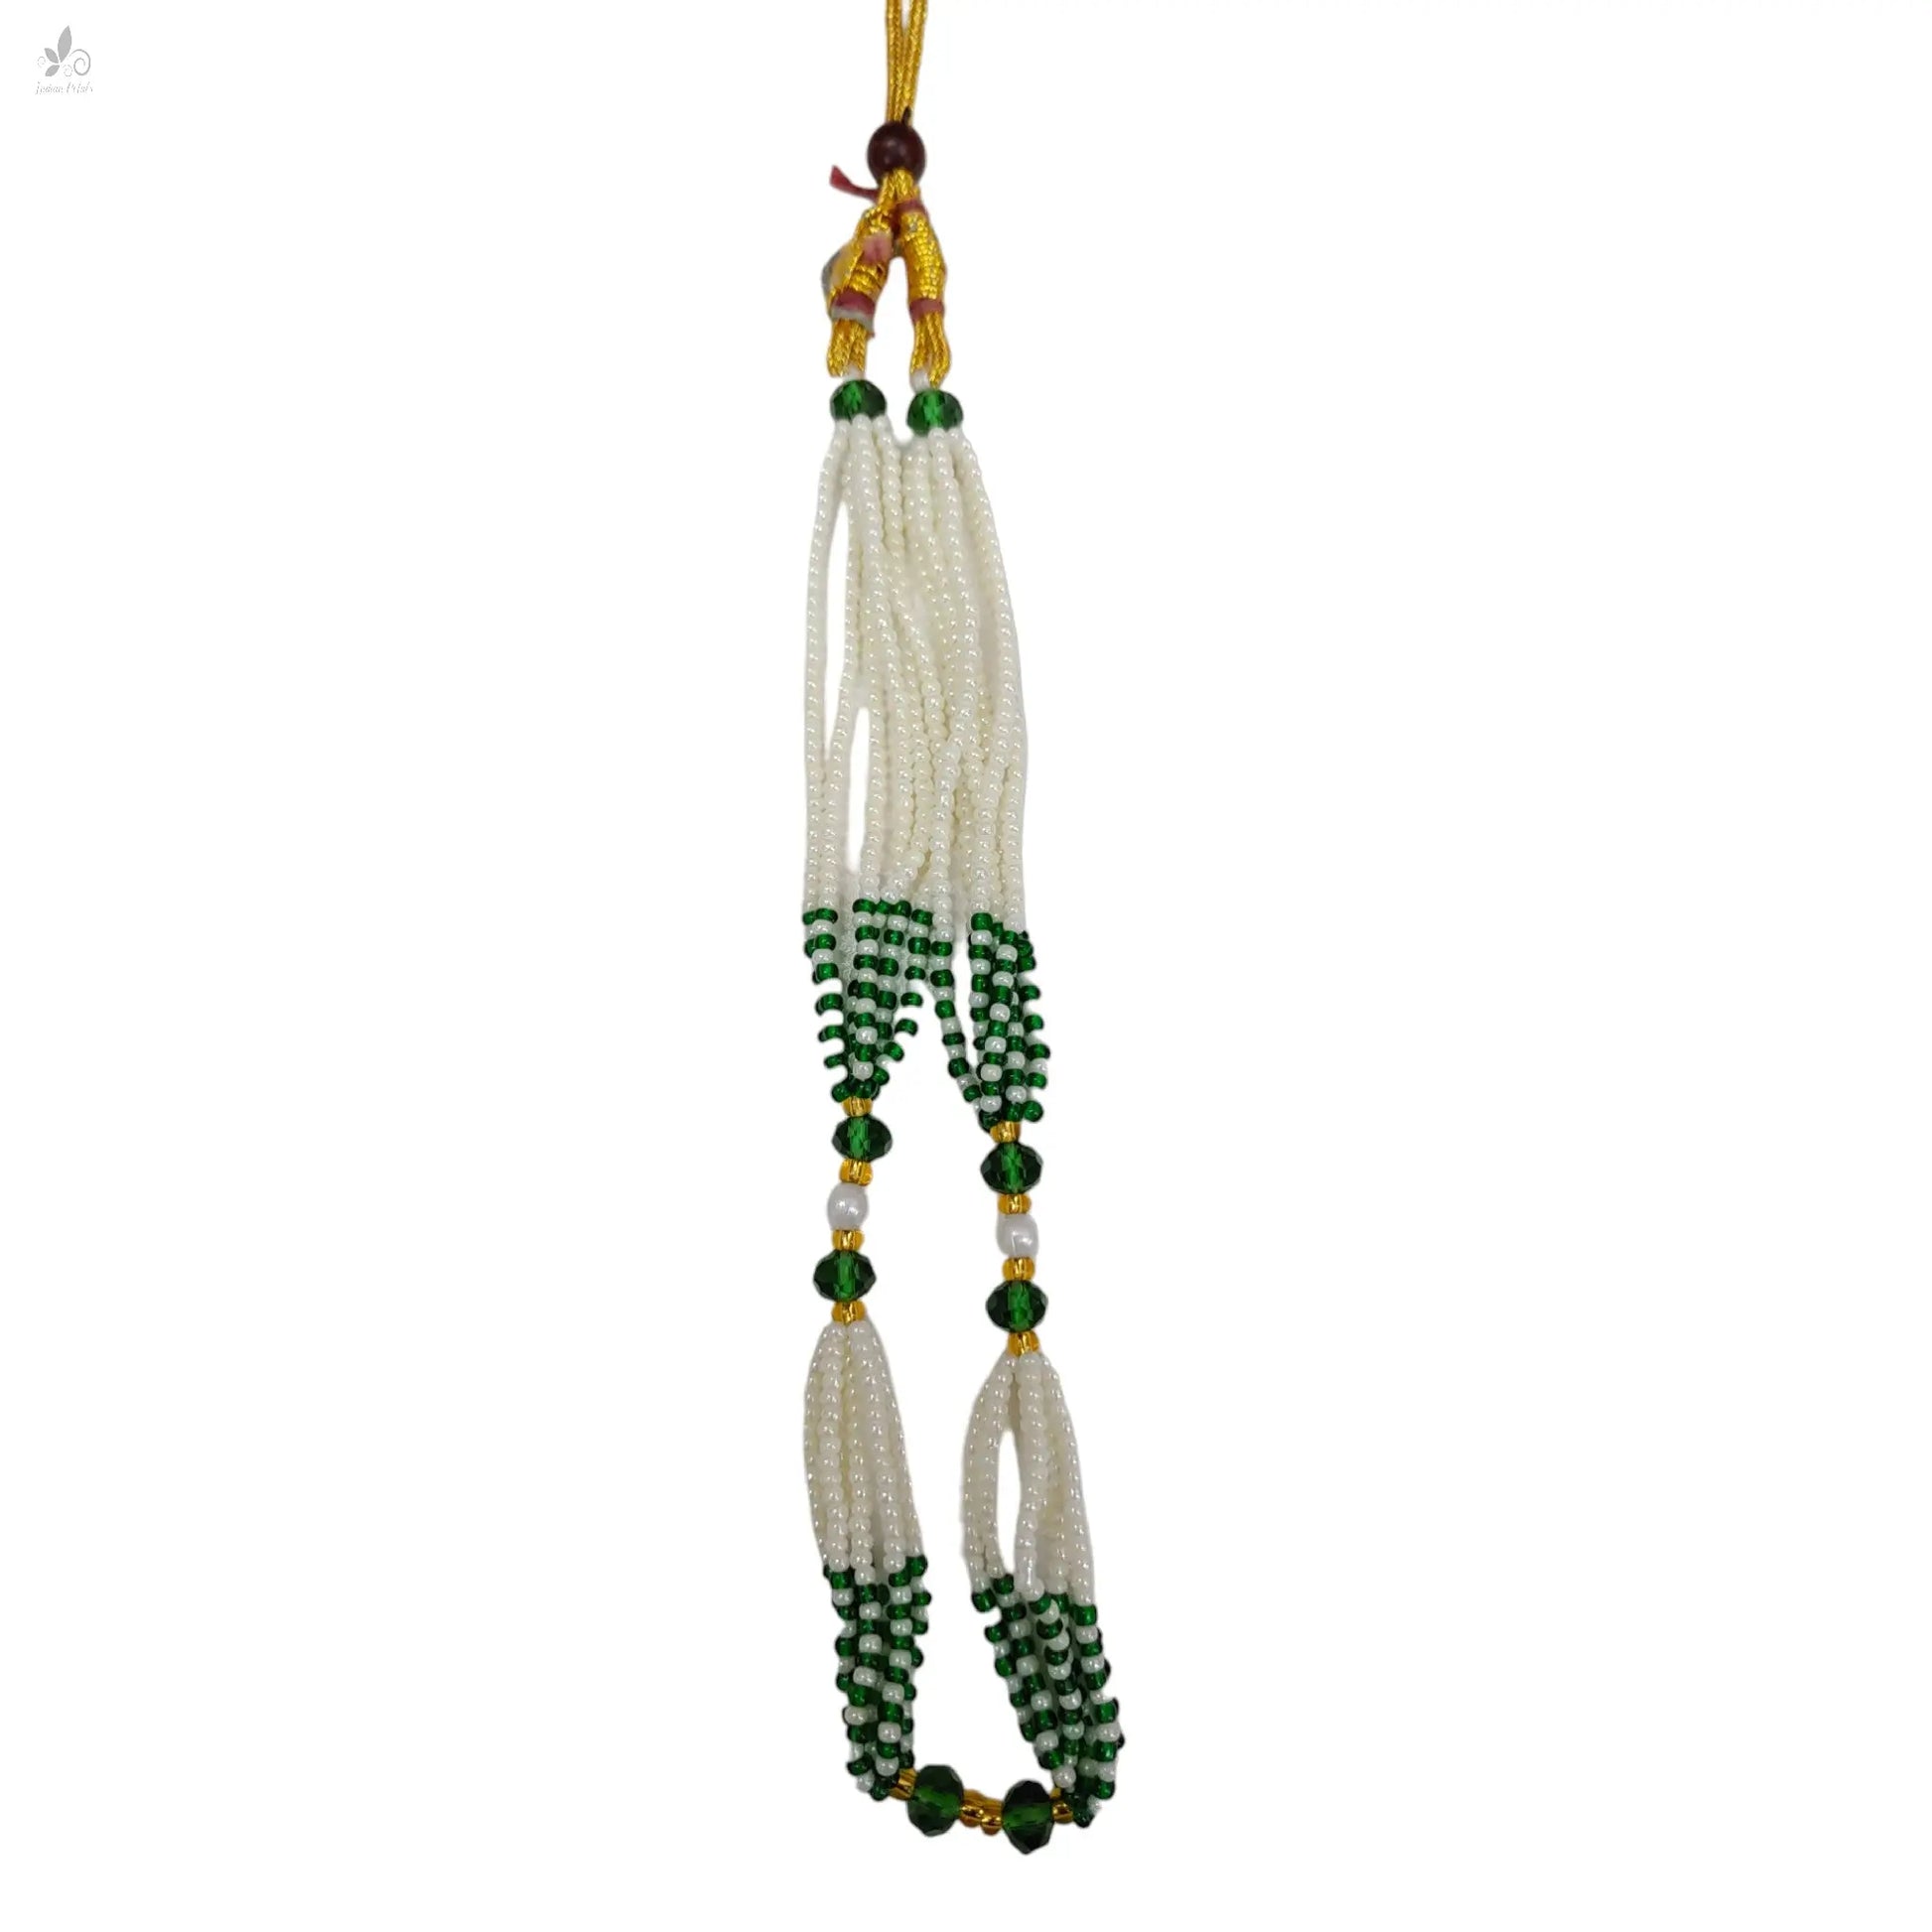 Indian Petals ABS Cheed Bead Fashion Jewelry Dori Mala for Photo Frame, Decoration, Fashion or Puja Use, Green